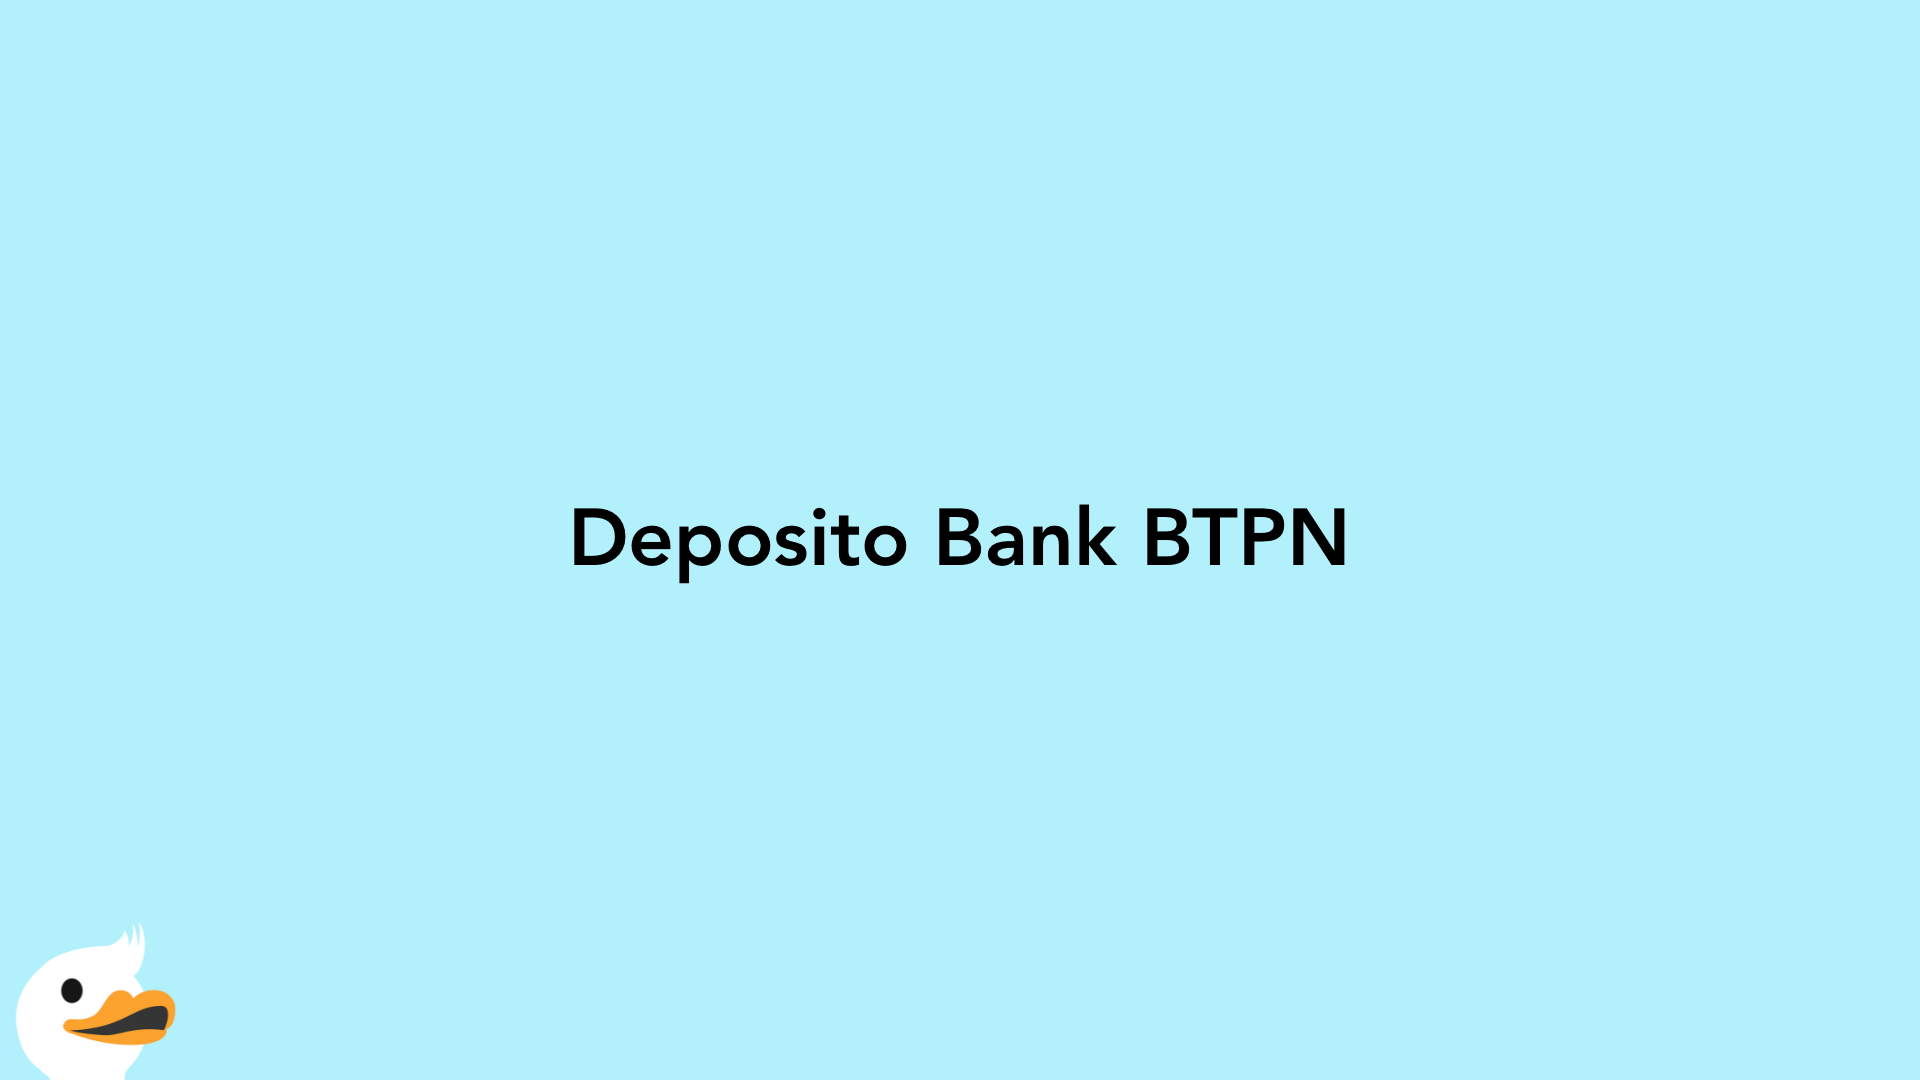 Deposito Bank BTPN